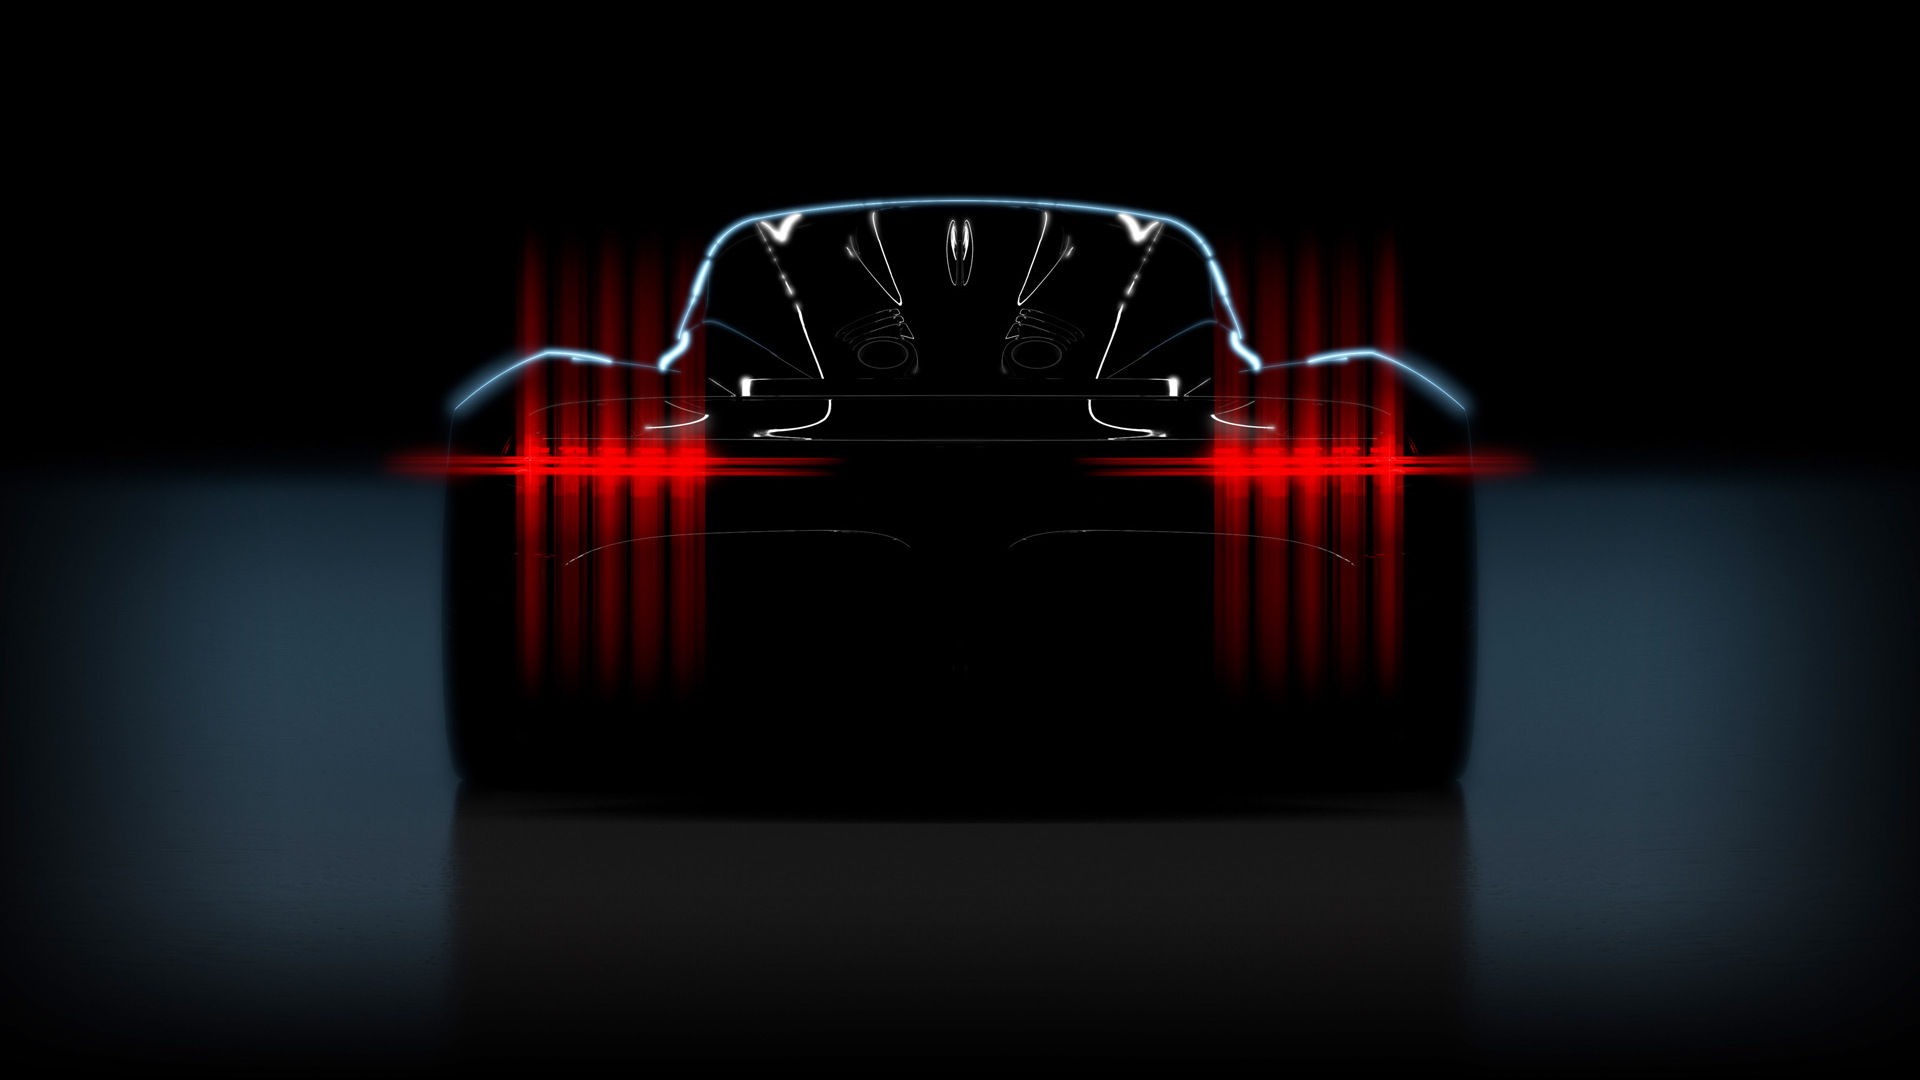 Teaser for Aston Martin 003 hypercar debuting in 2021